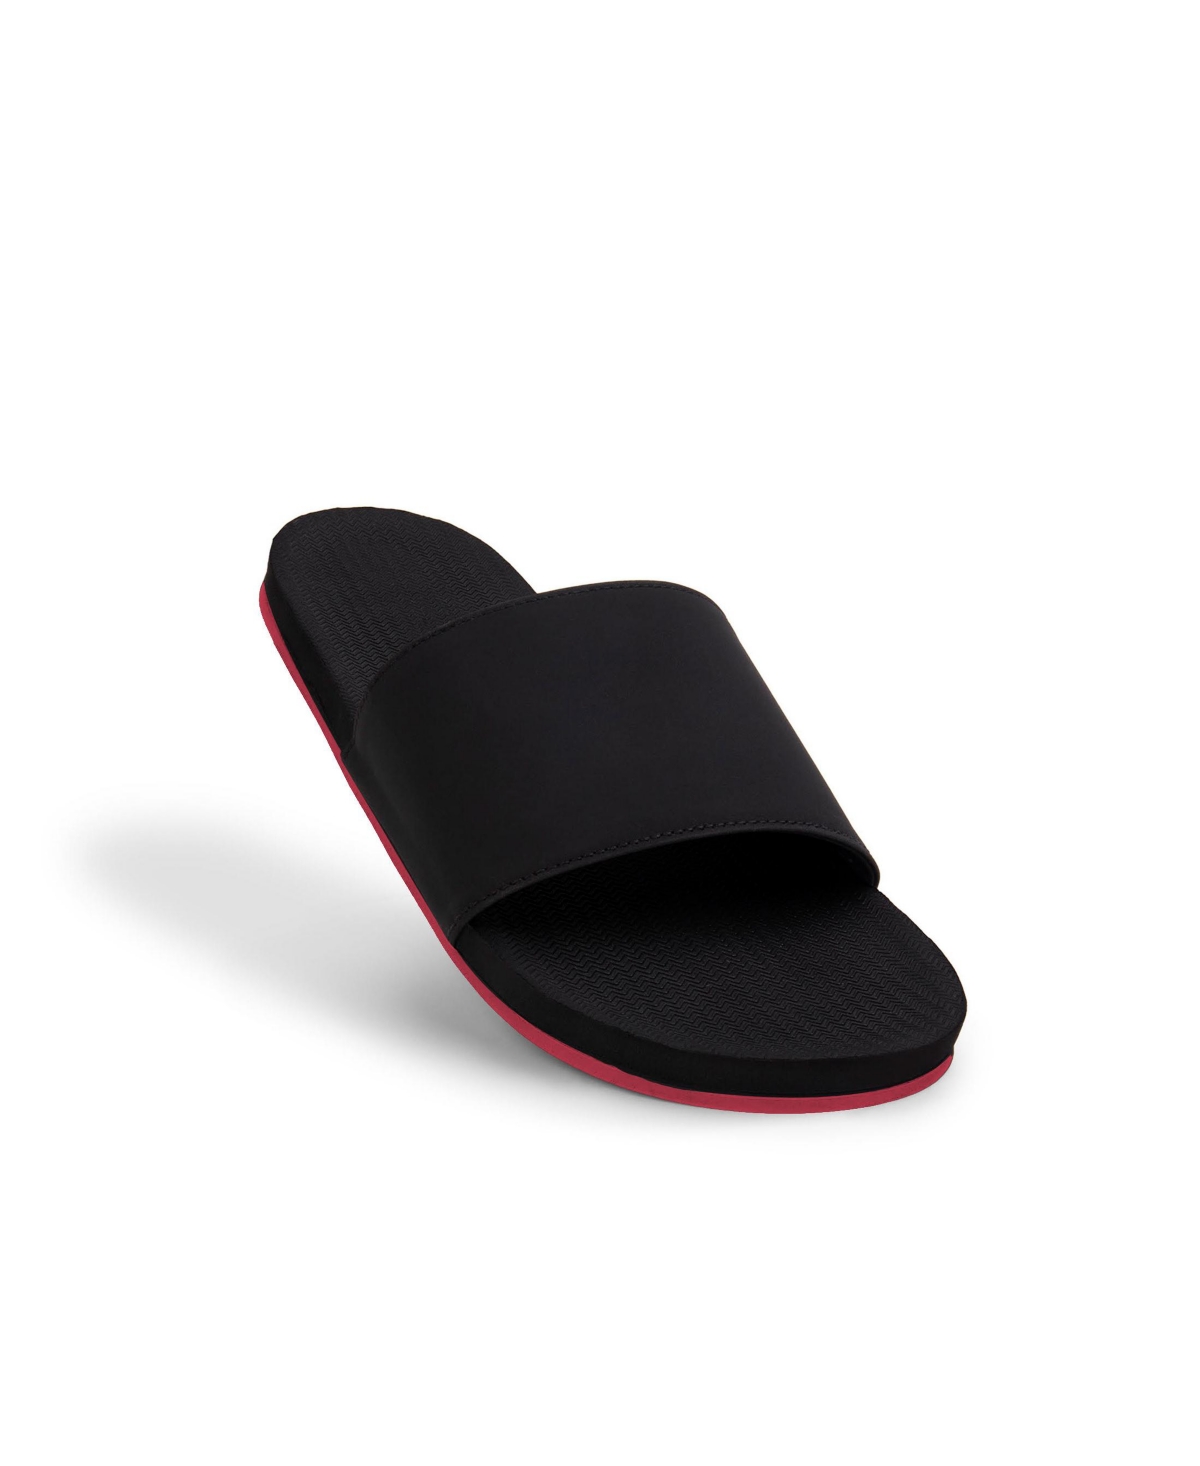 Men's Slide Sneaker Sole - Sole indigo/shore